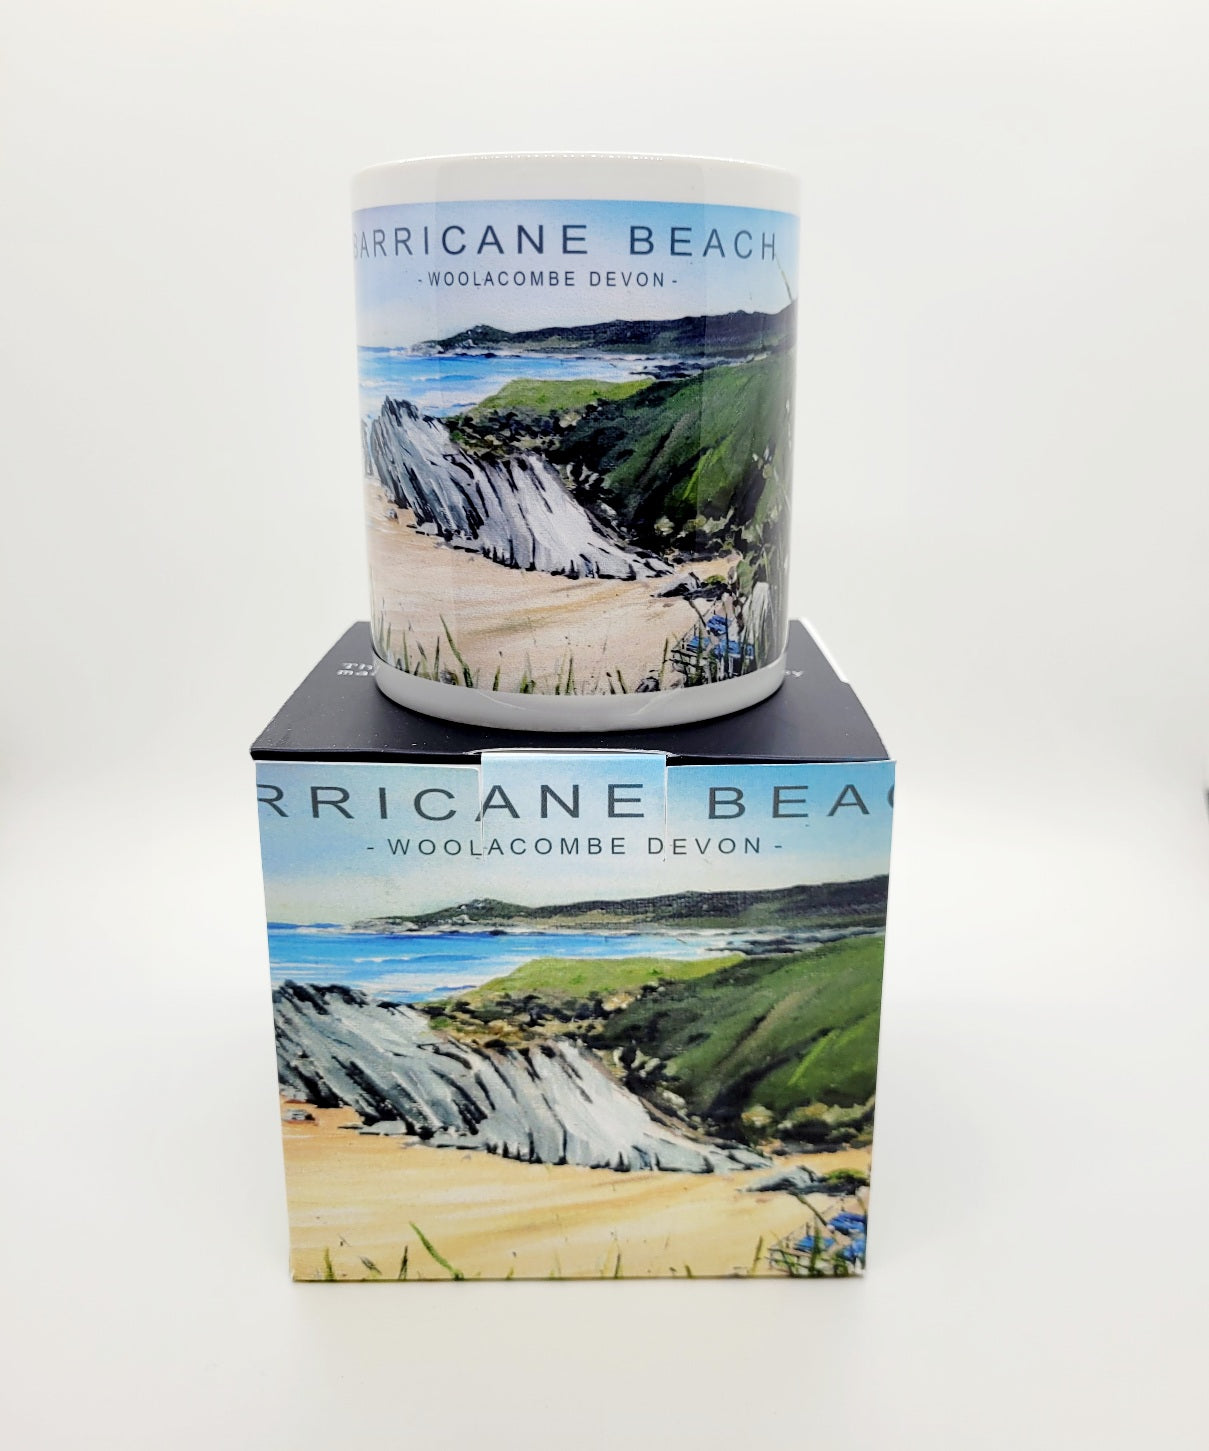 Barricane Beach Mug